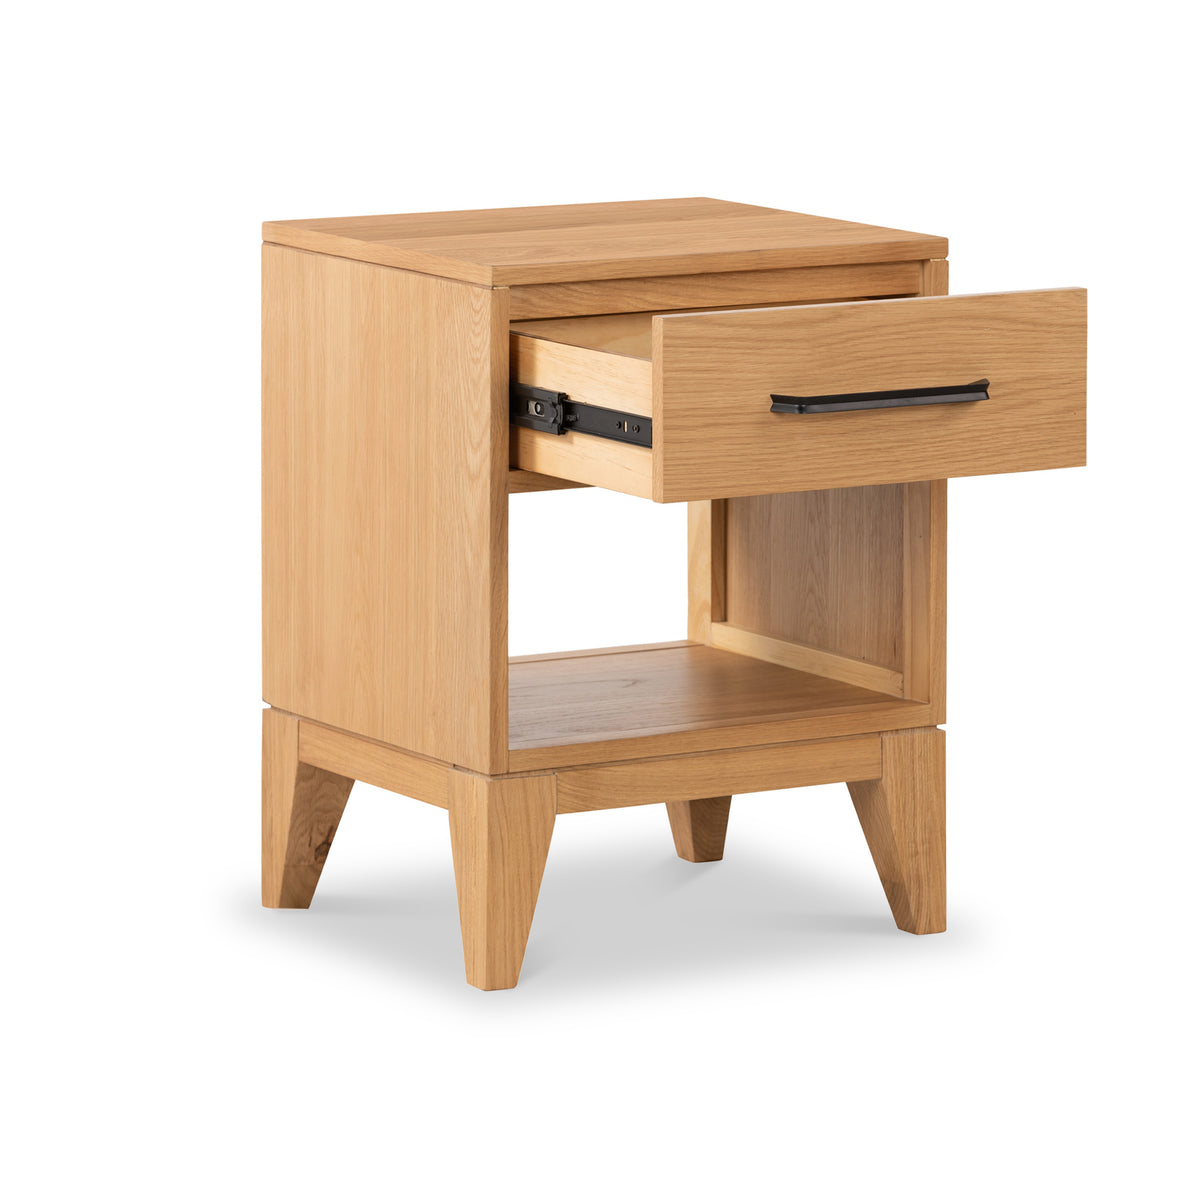 Sunburst Oak 1 Drawer Open Shelf Bedside Table from Roseland Furniture